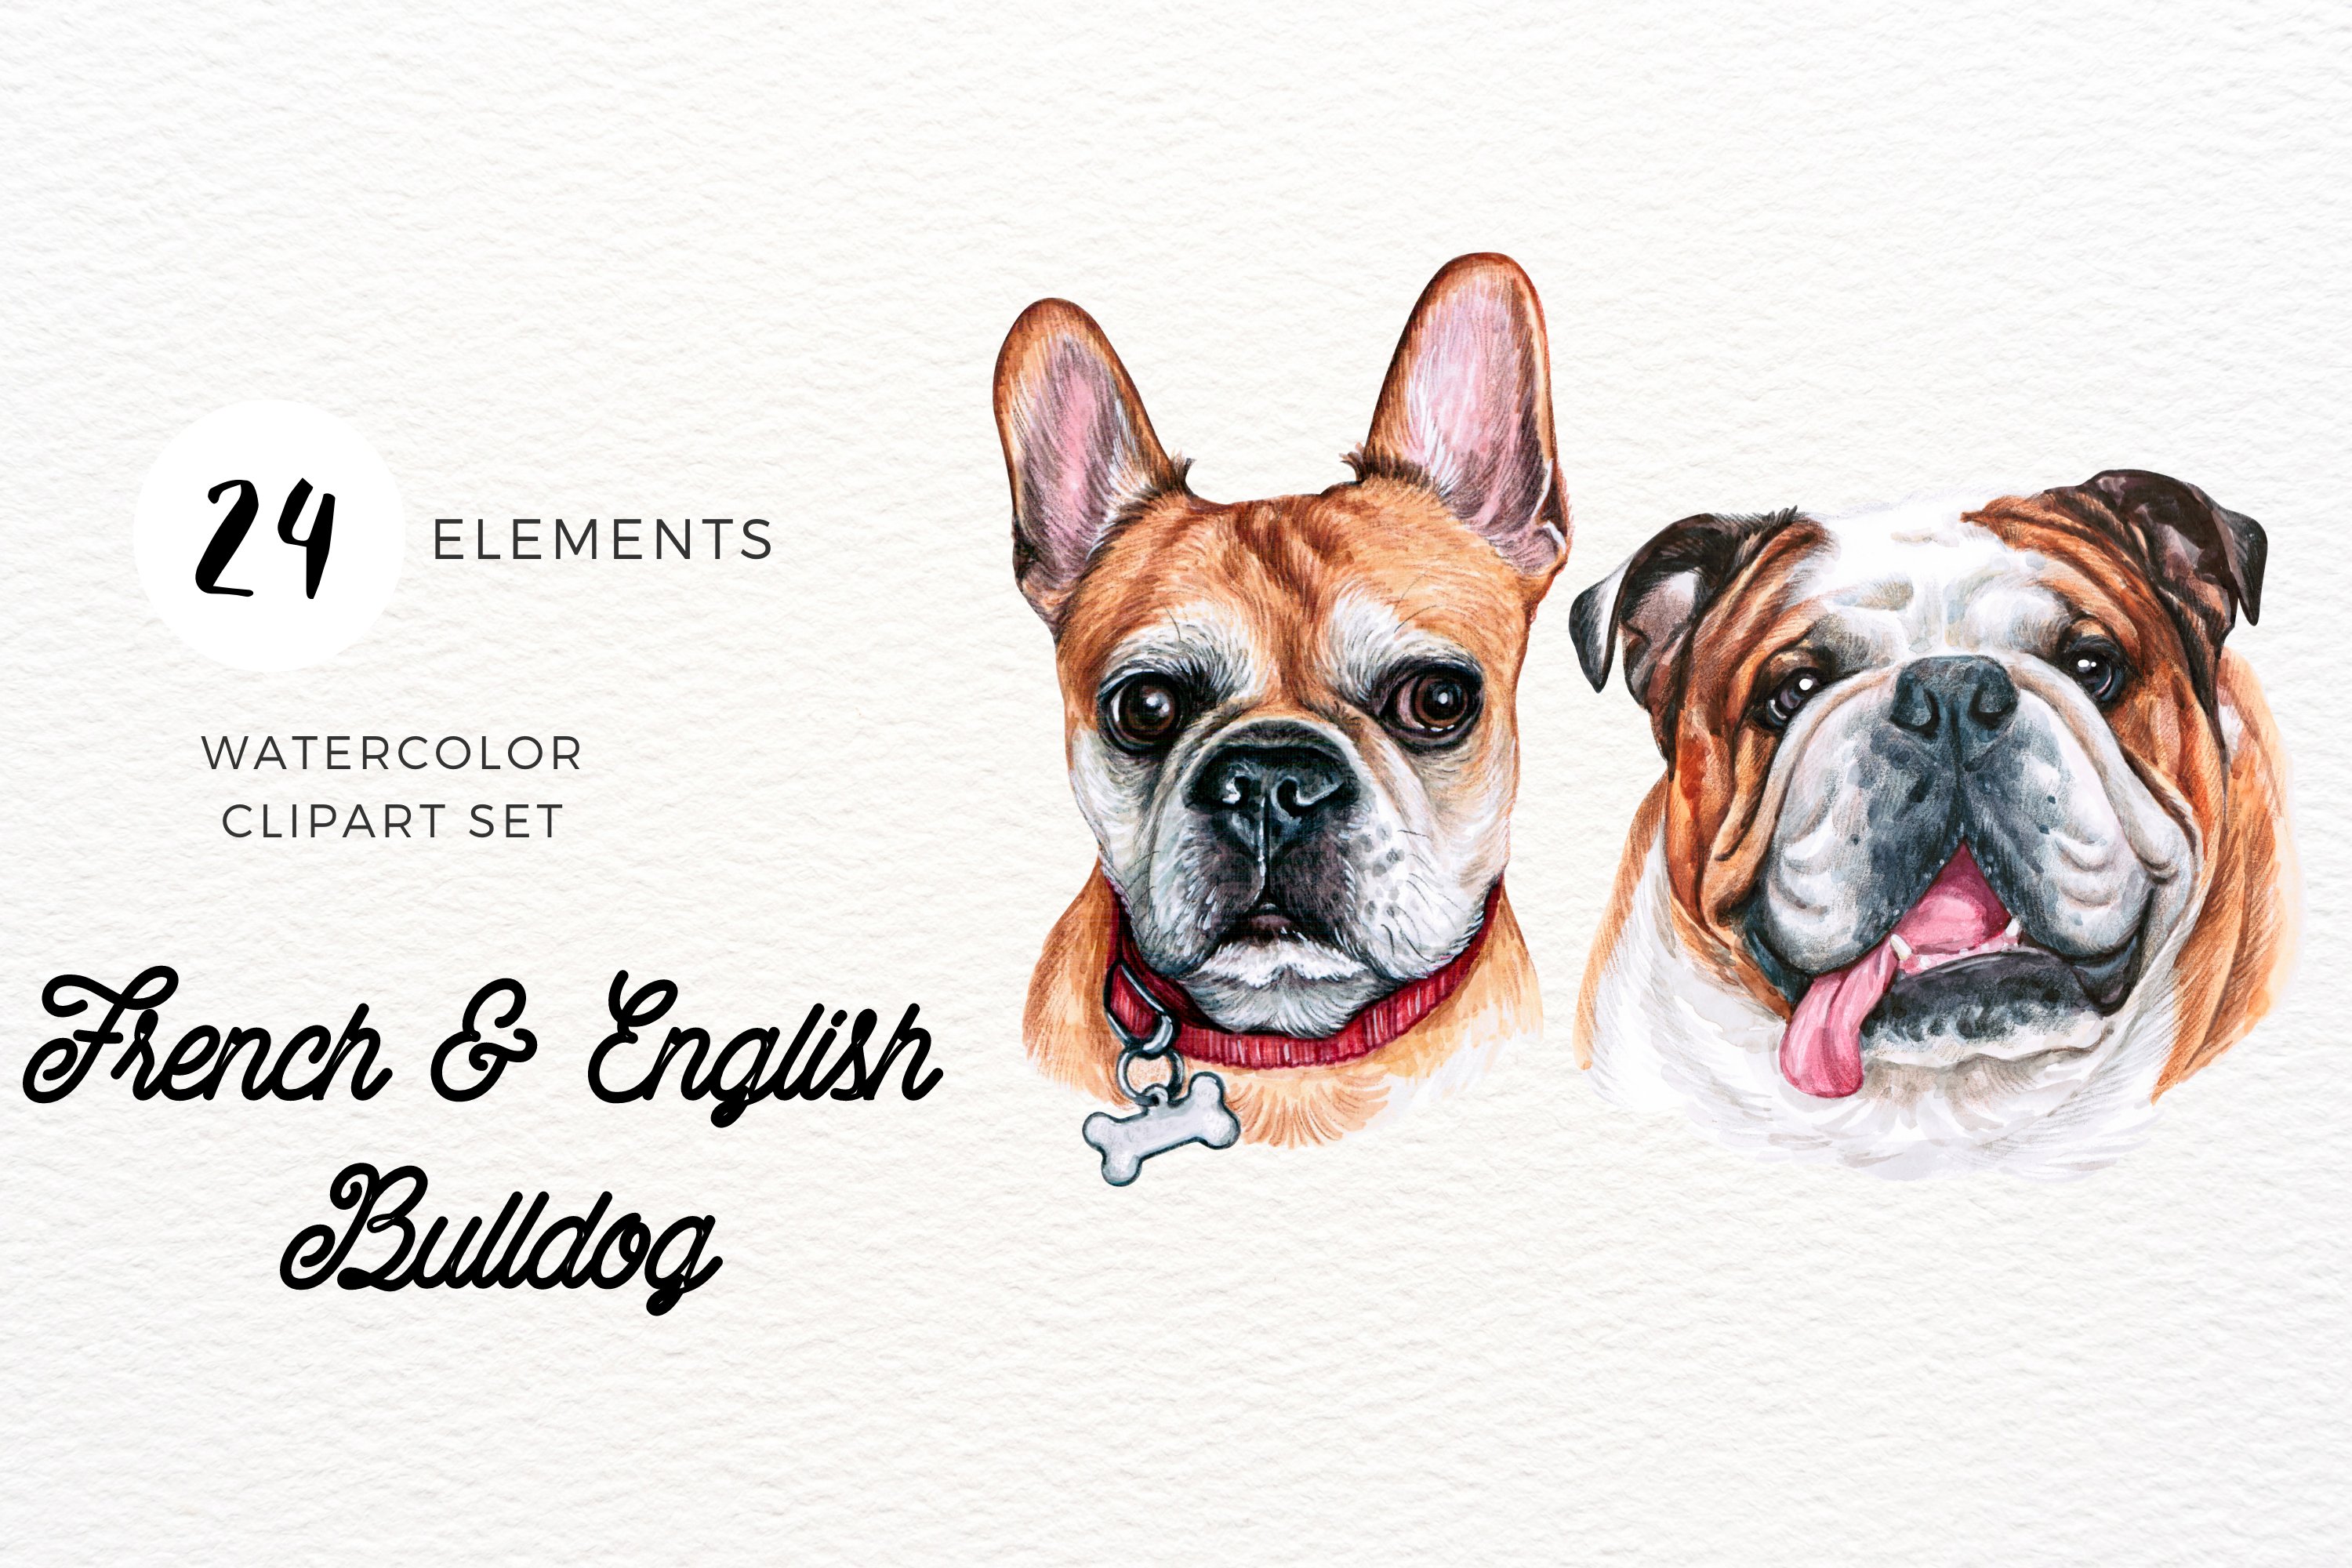 Cute Bulldog Watercolor Illustration cover image.